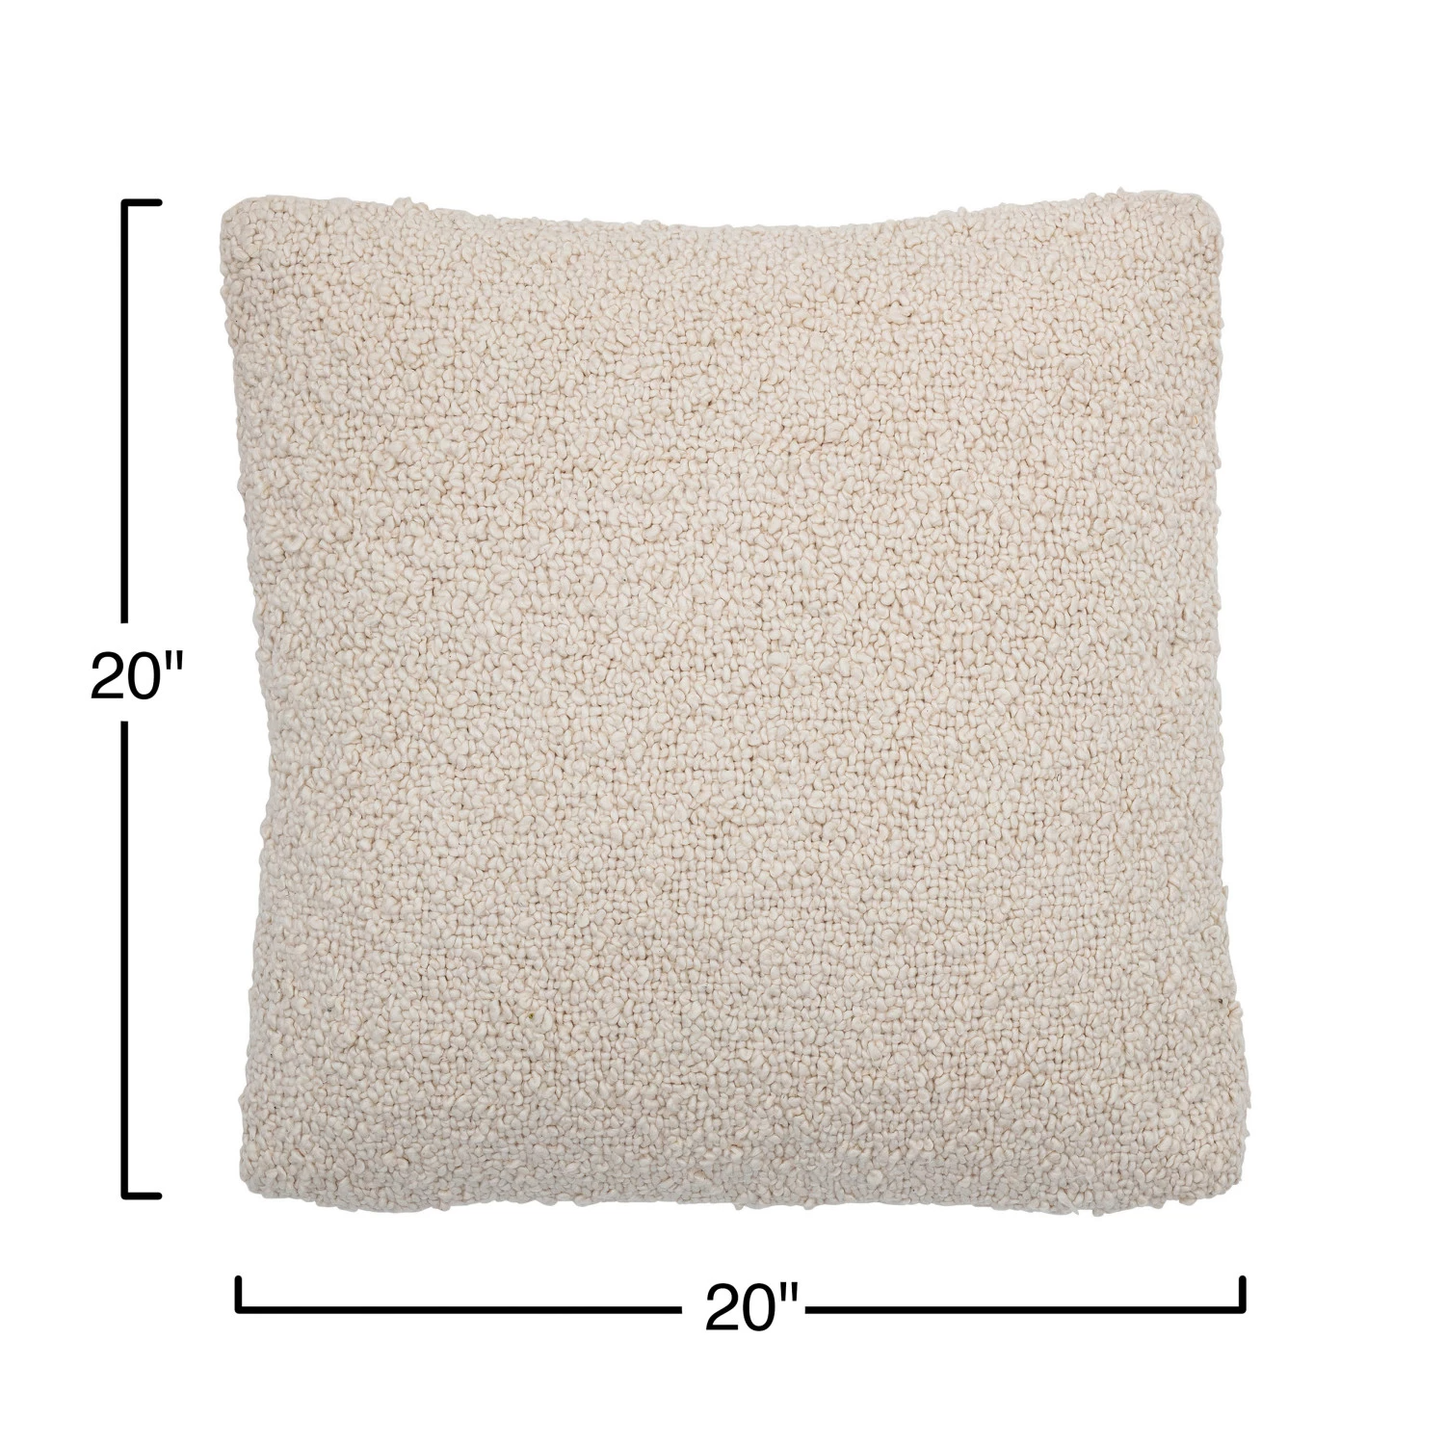 20" Woven Cotton Bouclé Pillow, Polyester Fill - Curated Home Decor